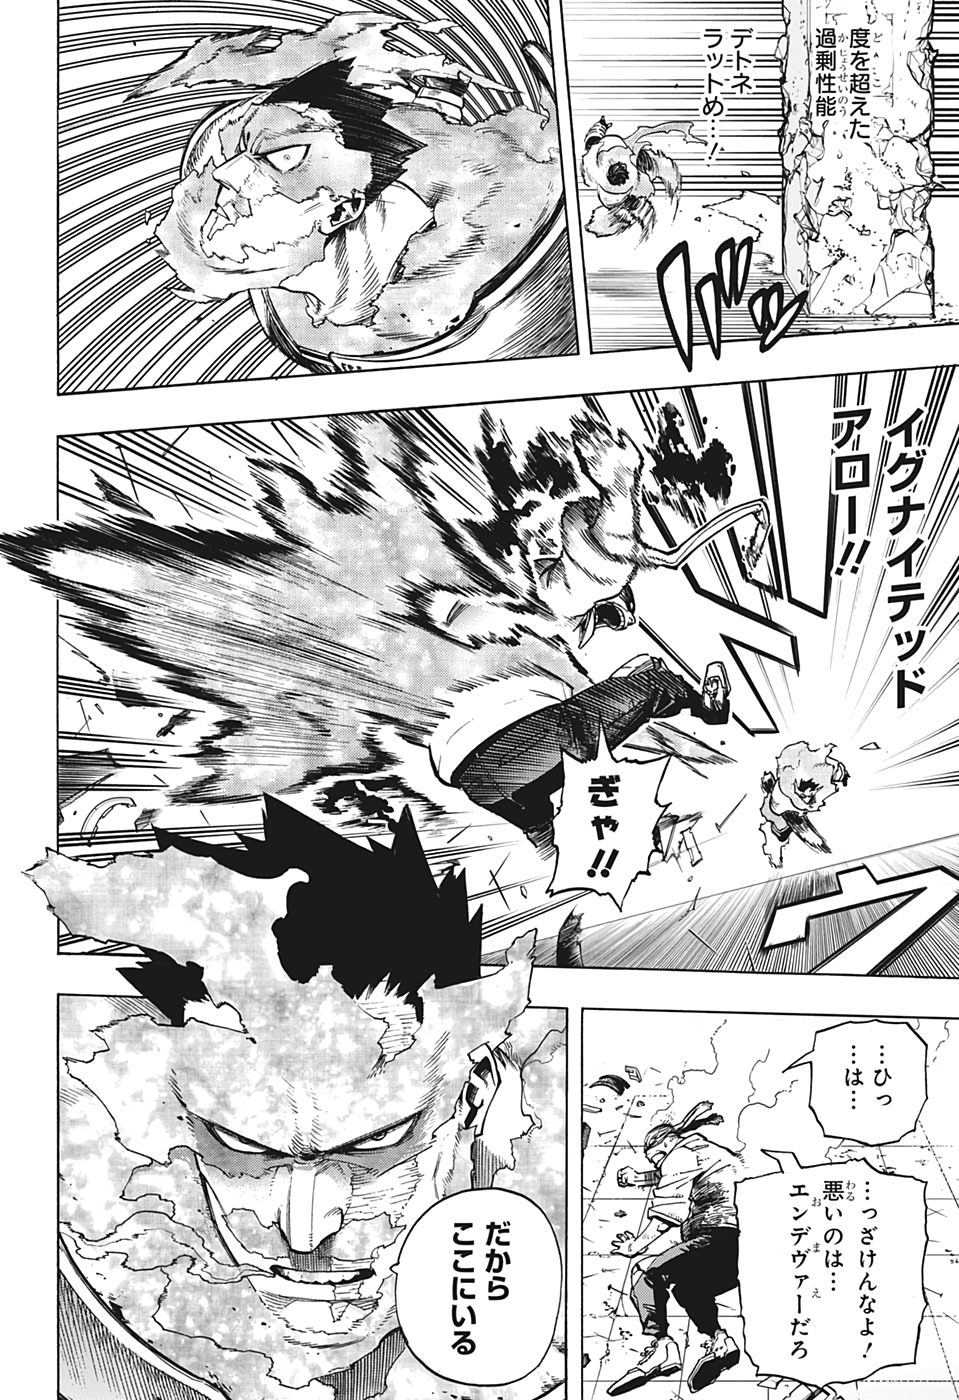 Boku no Hero Academia - Chapter 311 - Page 2